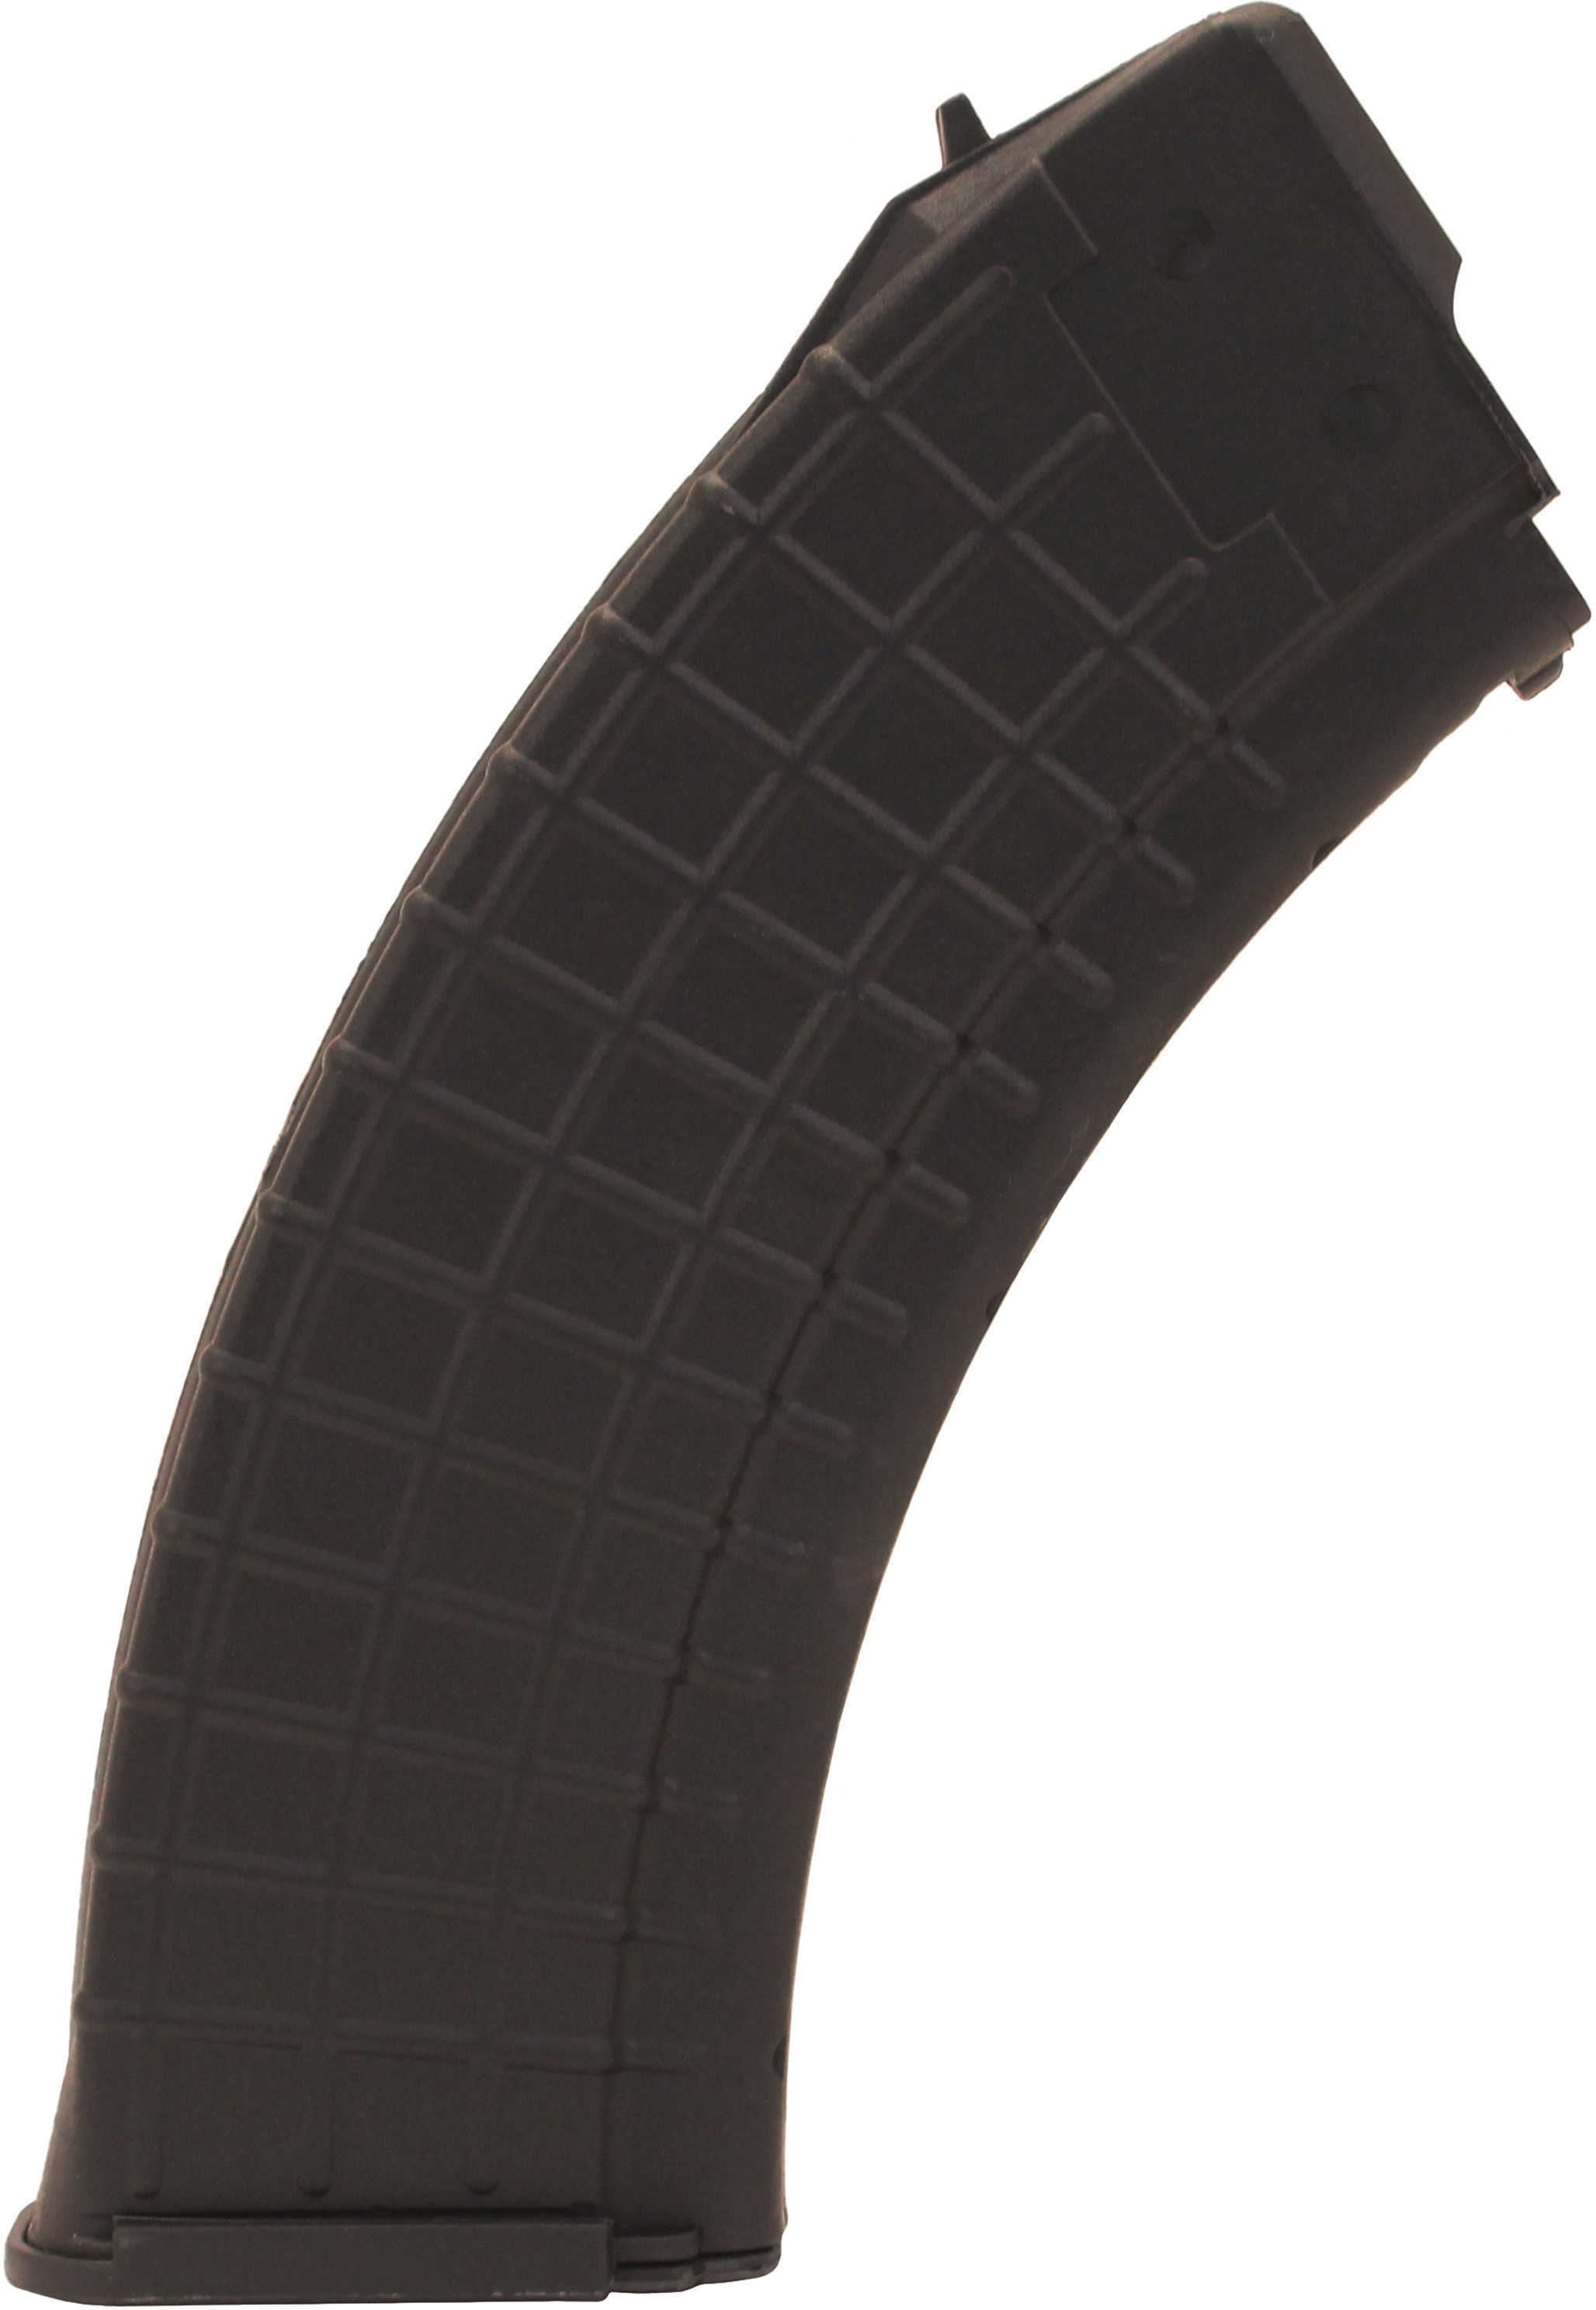 Promag AK-47 Magazine 7.62x39mm Black Polymer 30/R-img-1